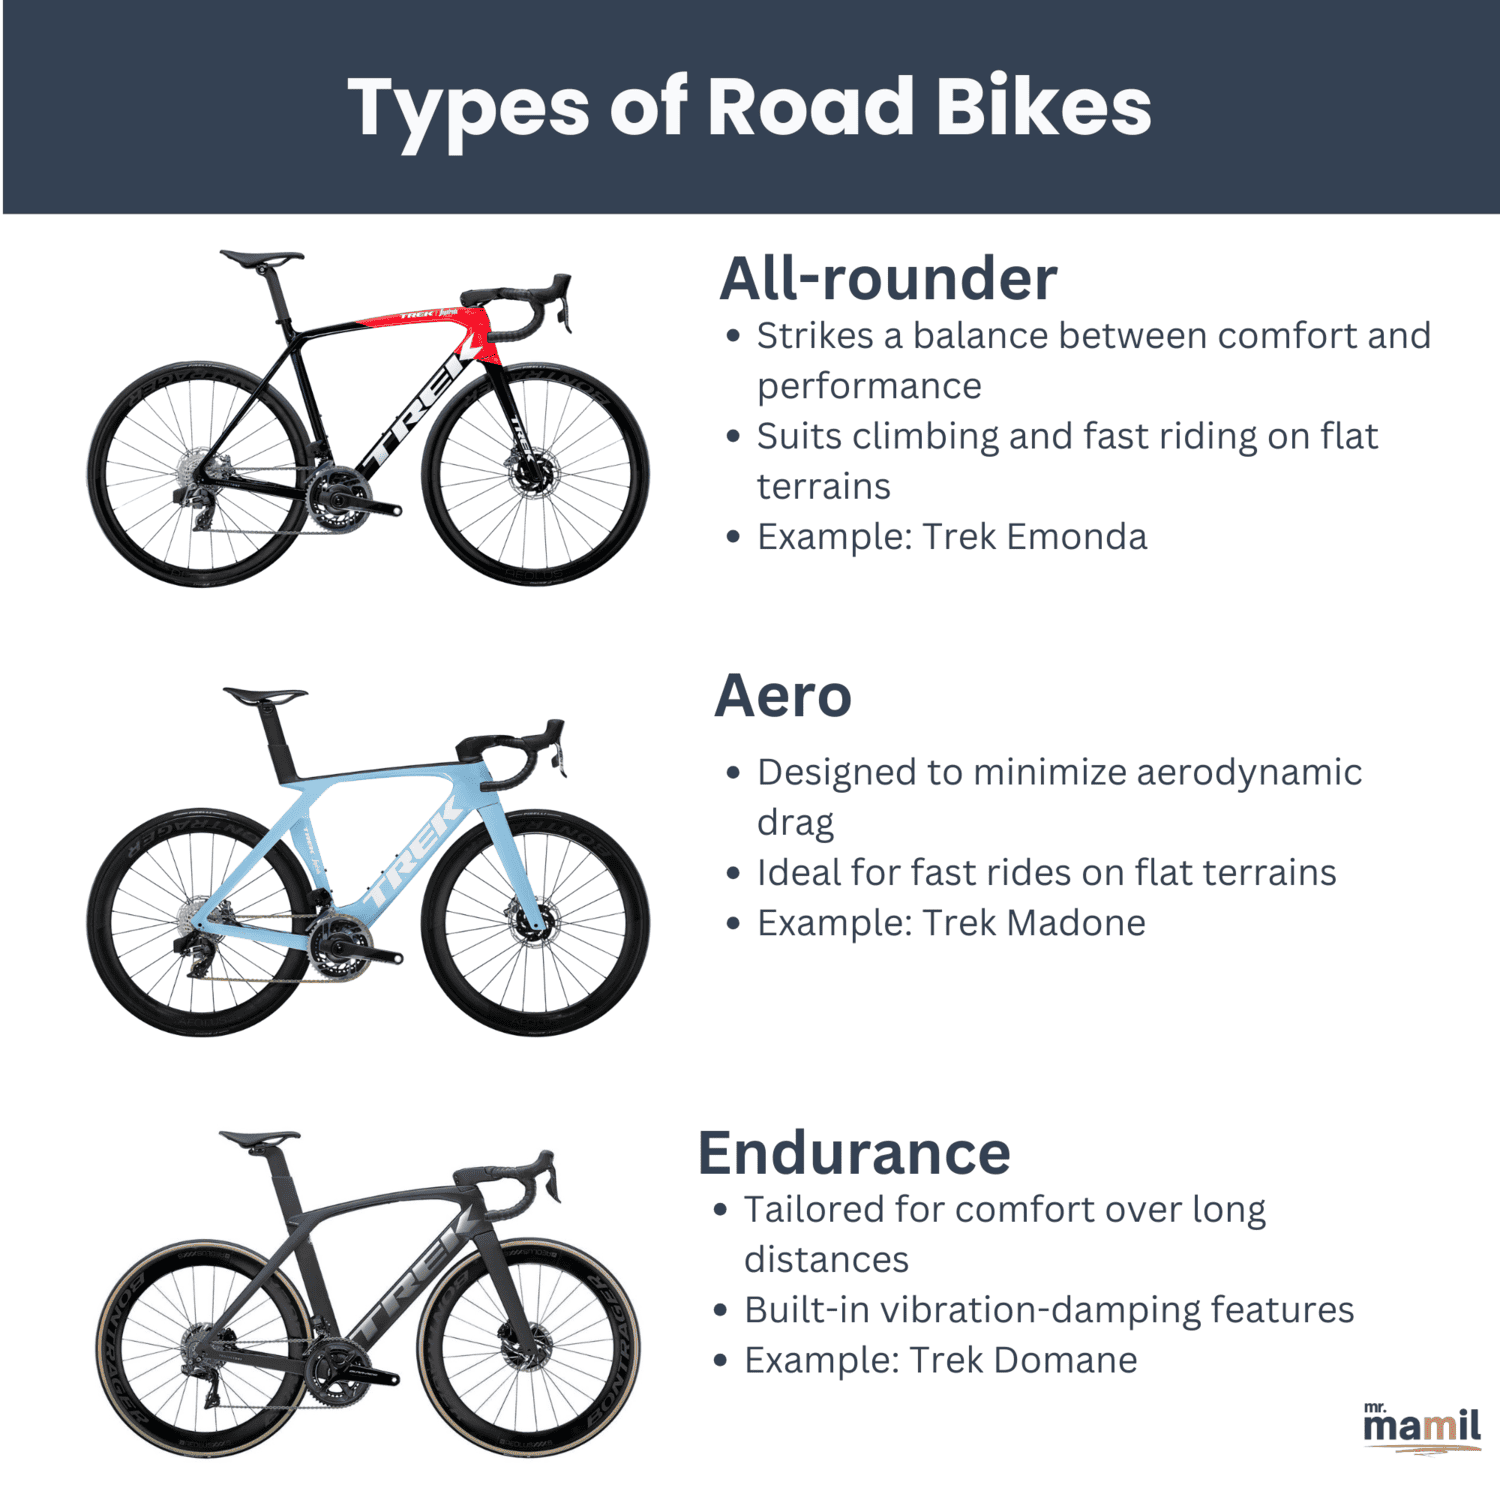 Types of Road Bikes